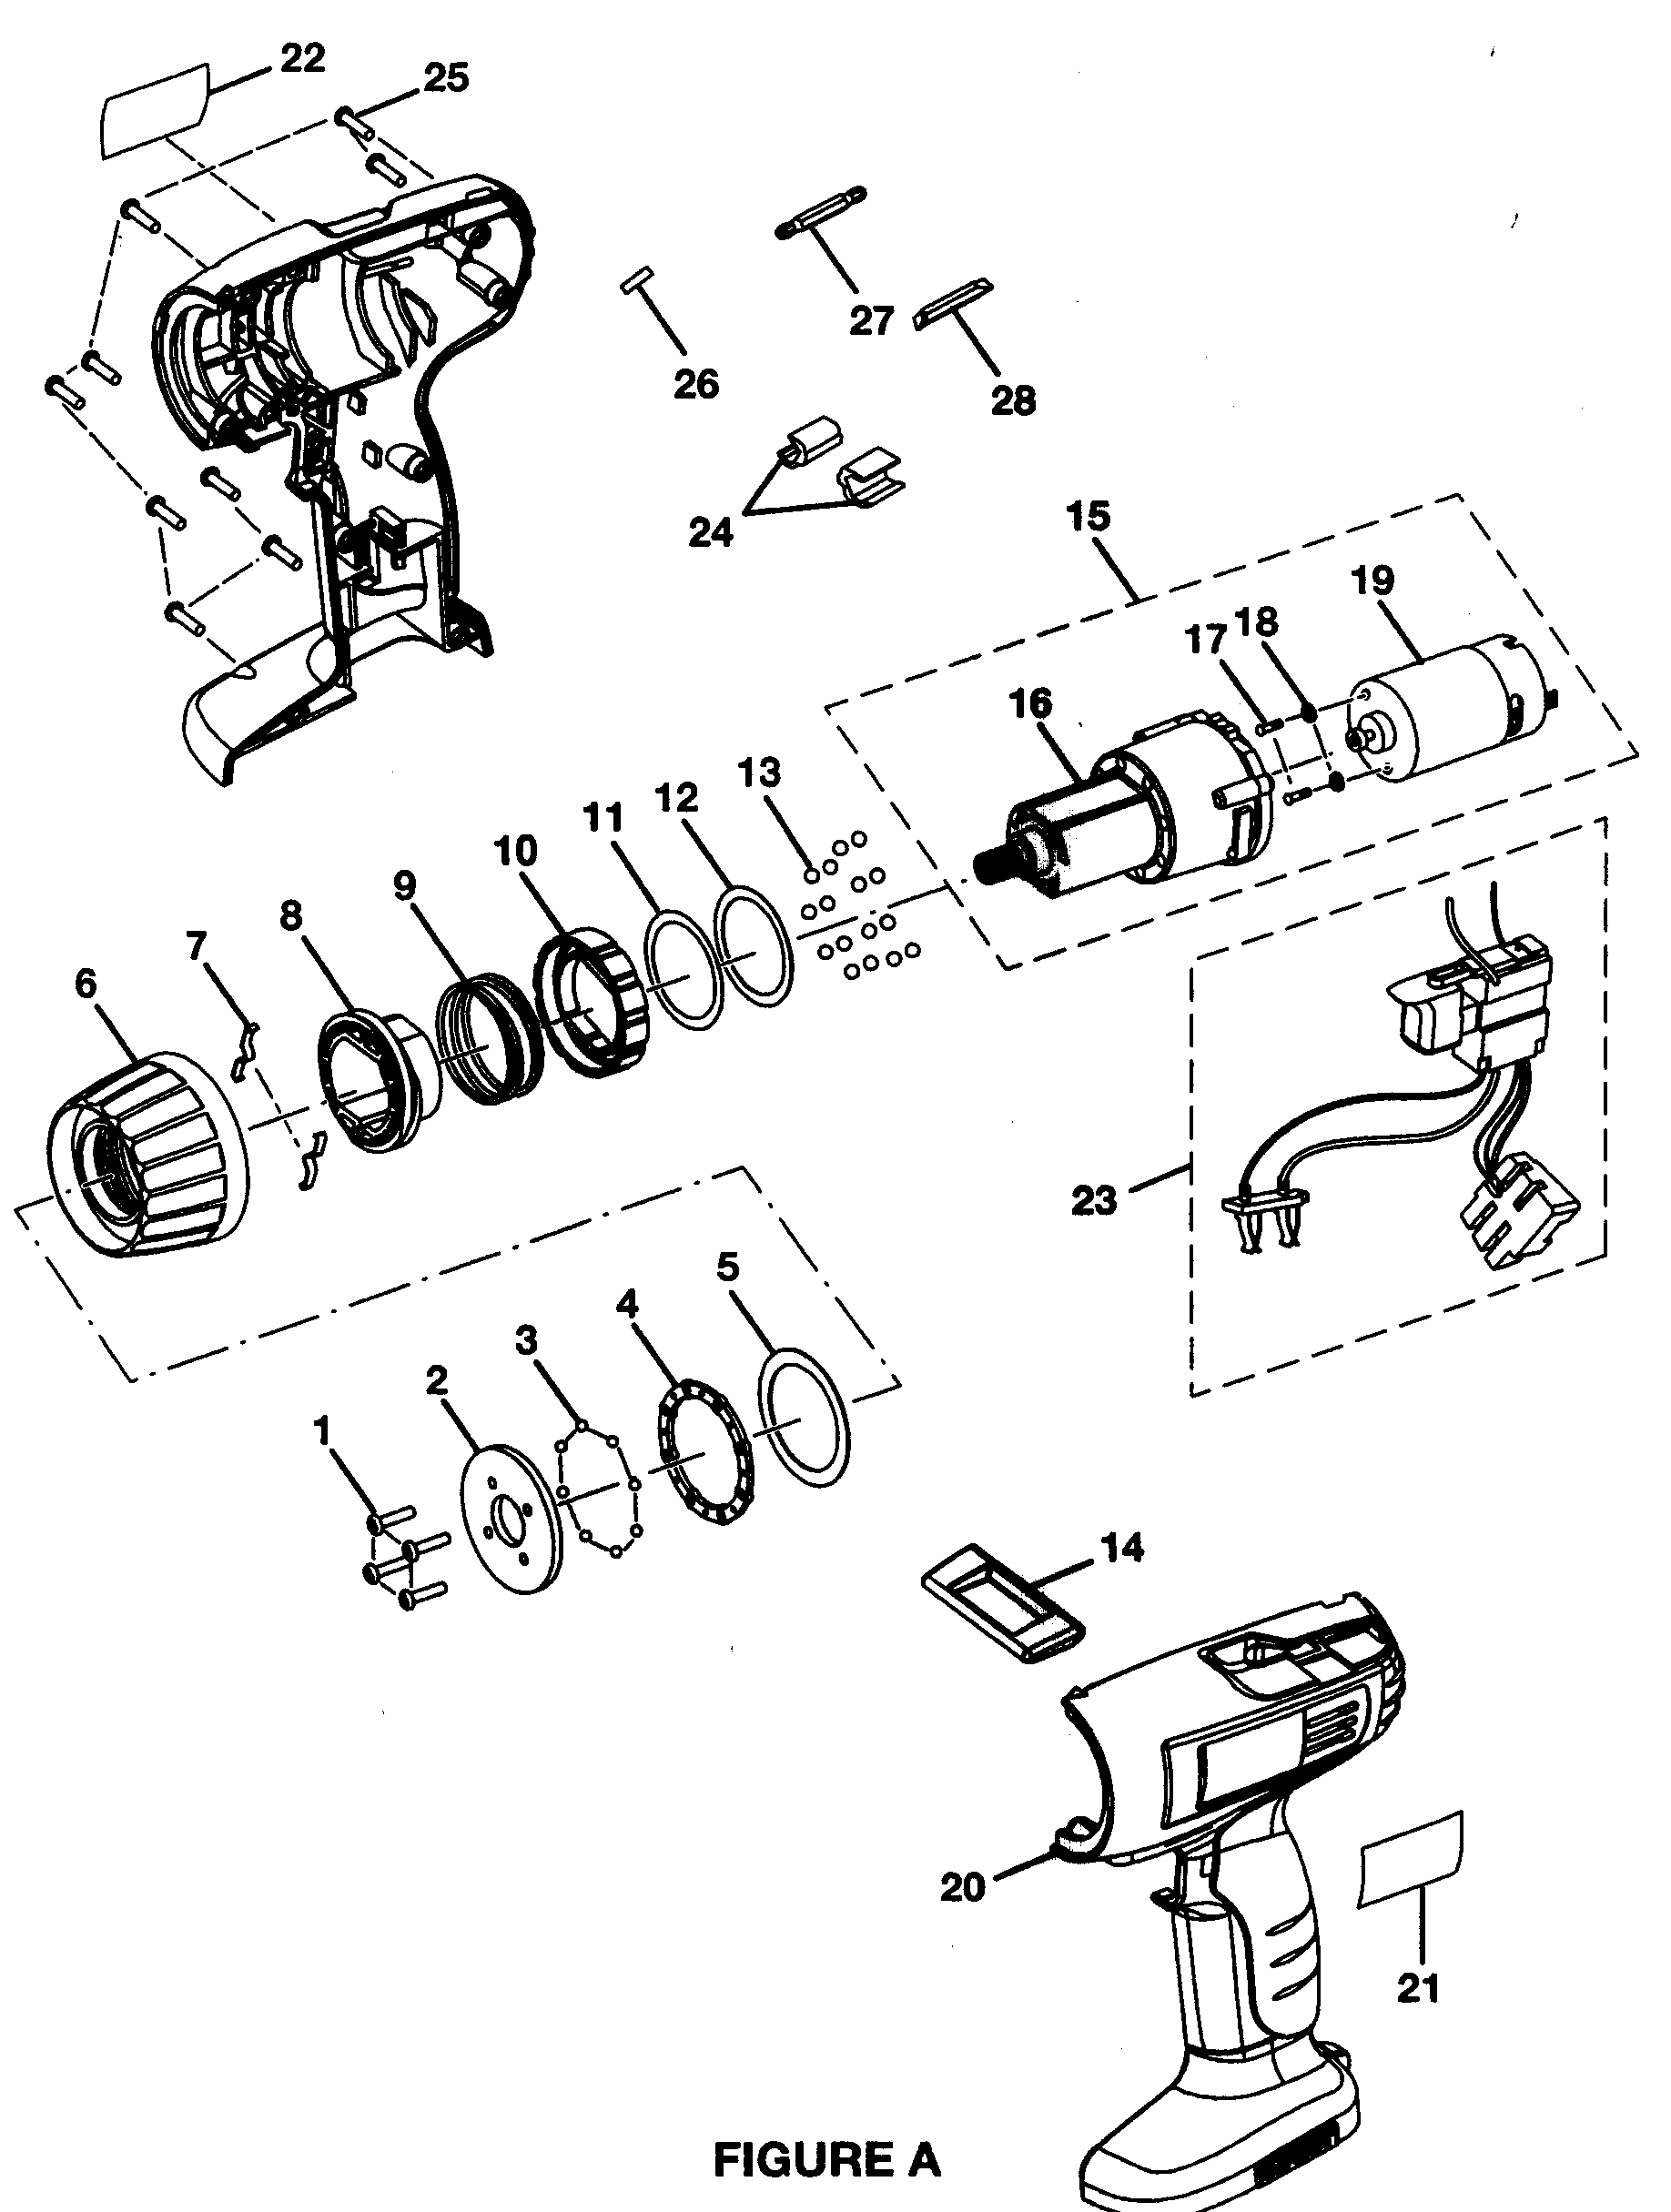 Craftsman Model 315113861 Drill Reversing Genuine Parts